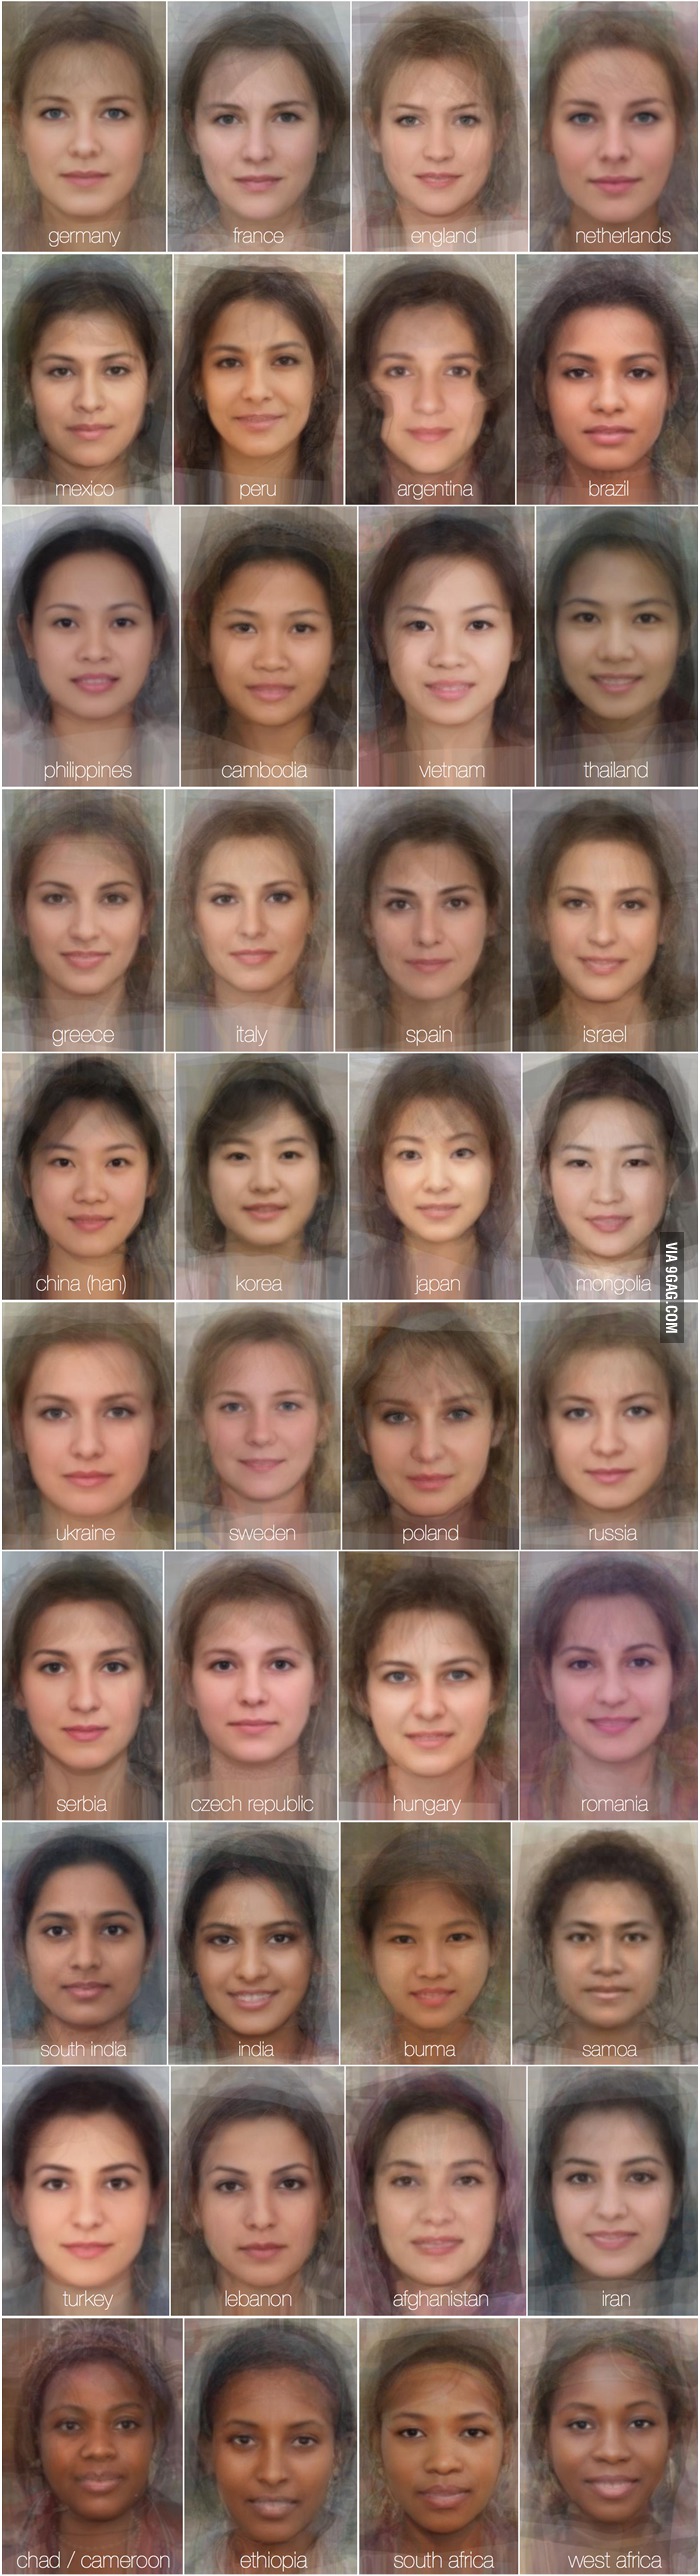 average-faces-of-women-around-the-world